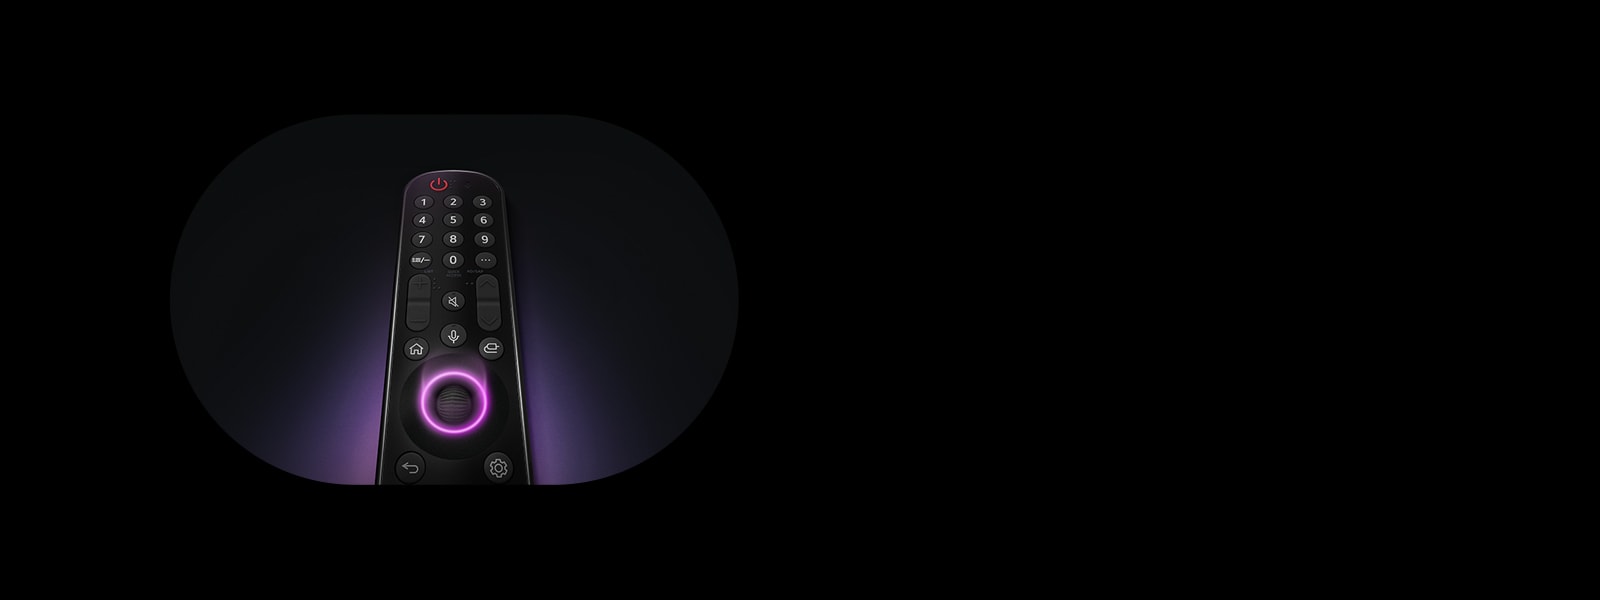 LG Magic Remote ที่มีปุ่มวงกลมตรงกลาง โดยมีแสงสีม่วงนีออนเล็ดลอดออกมารอบๆ ปุ่มเพื่อไฮไลต์ แสงสีม่วงอ่อนๆ ล้อมรอบรีโมทบนพื้นหลังสีดำ